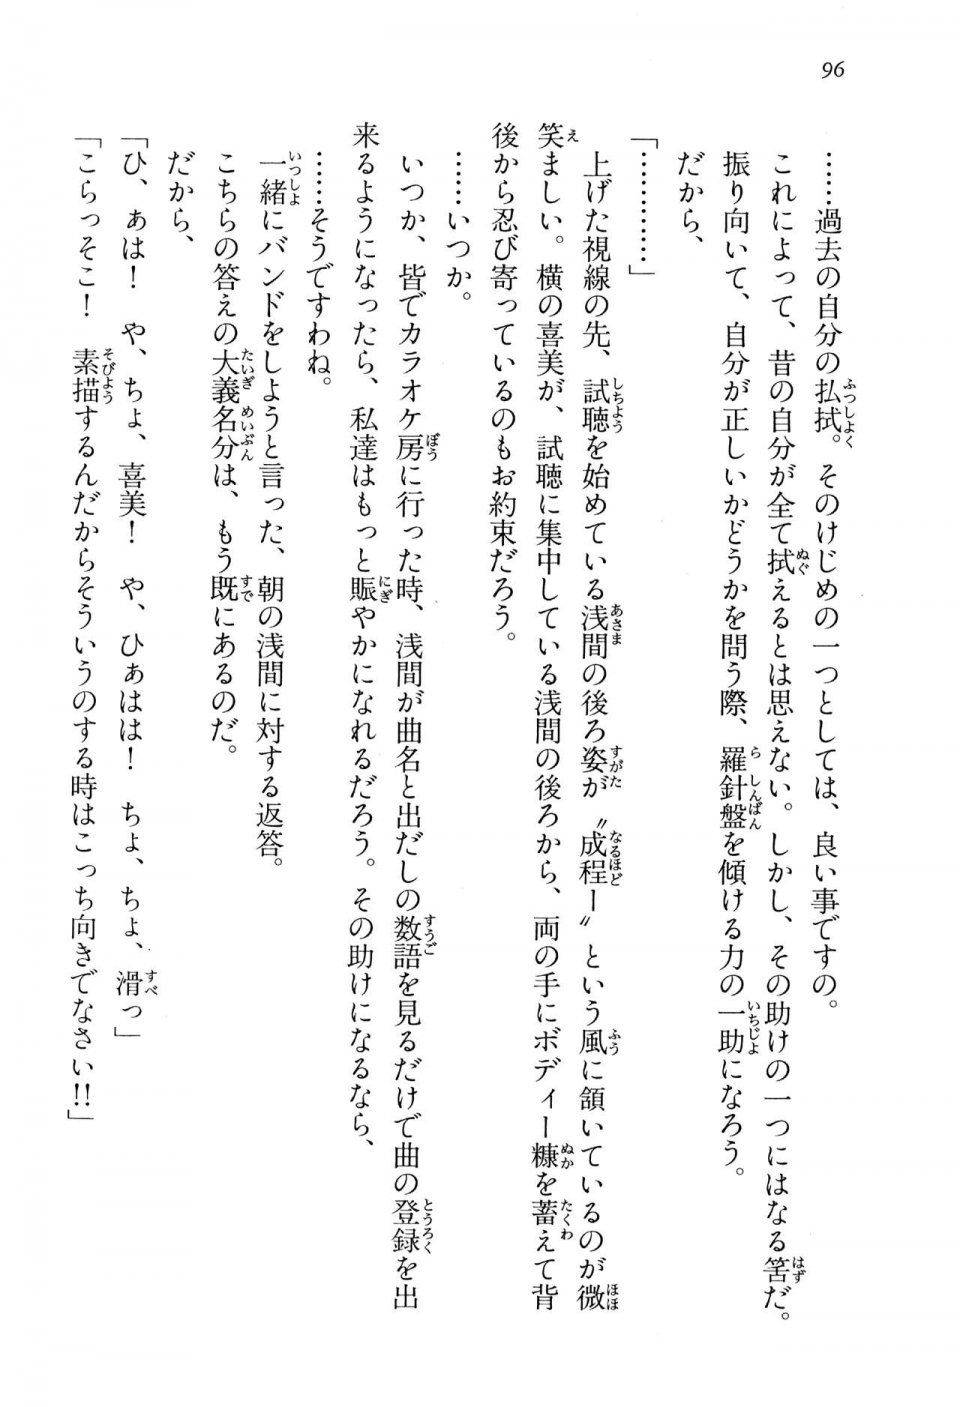 Kyoukai Senjou no Horizon BD Special Mininovel Vol 3(2A) - Photo #100